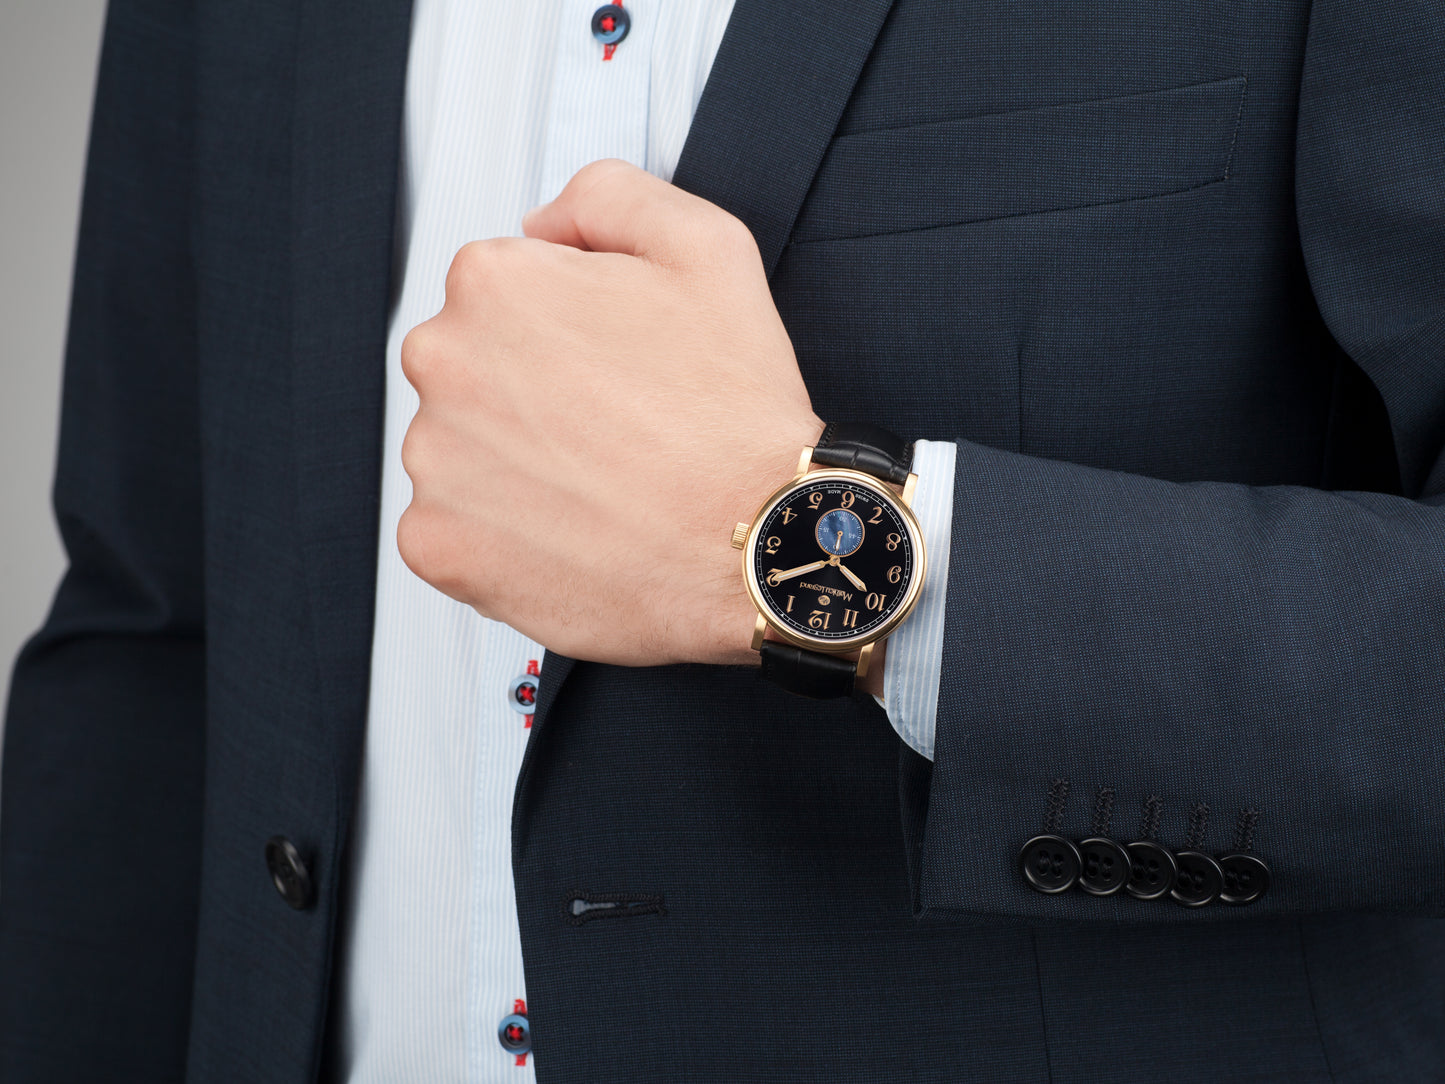 Automatic watches — Classique — Mathieu Legrand — gold IP black leather